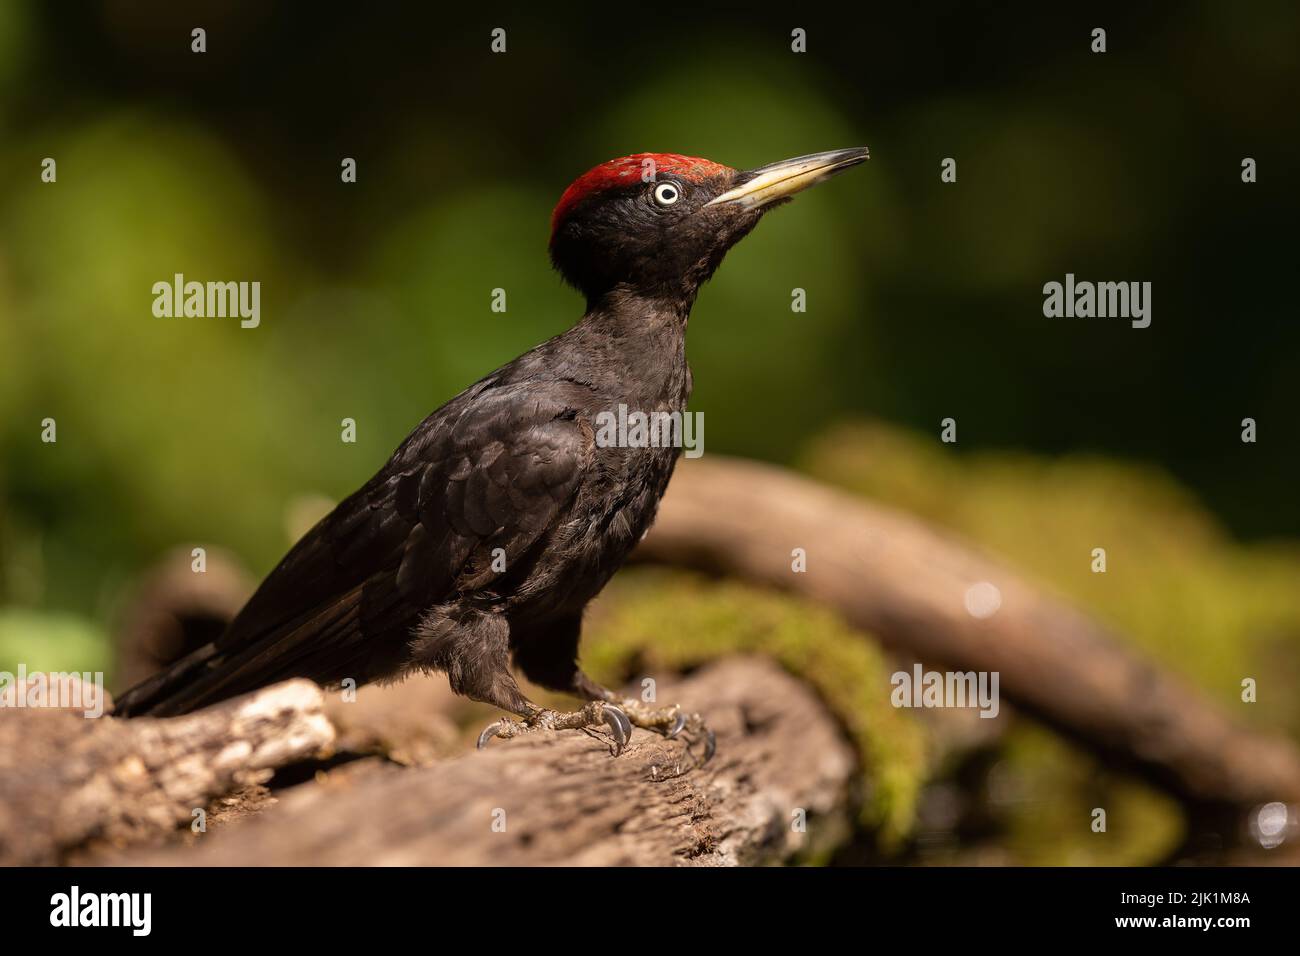 Black woodpecker sitting on fallen tree in spring nature Stock Photo